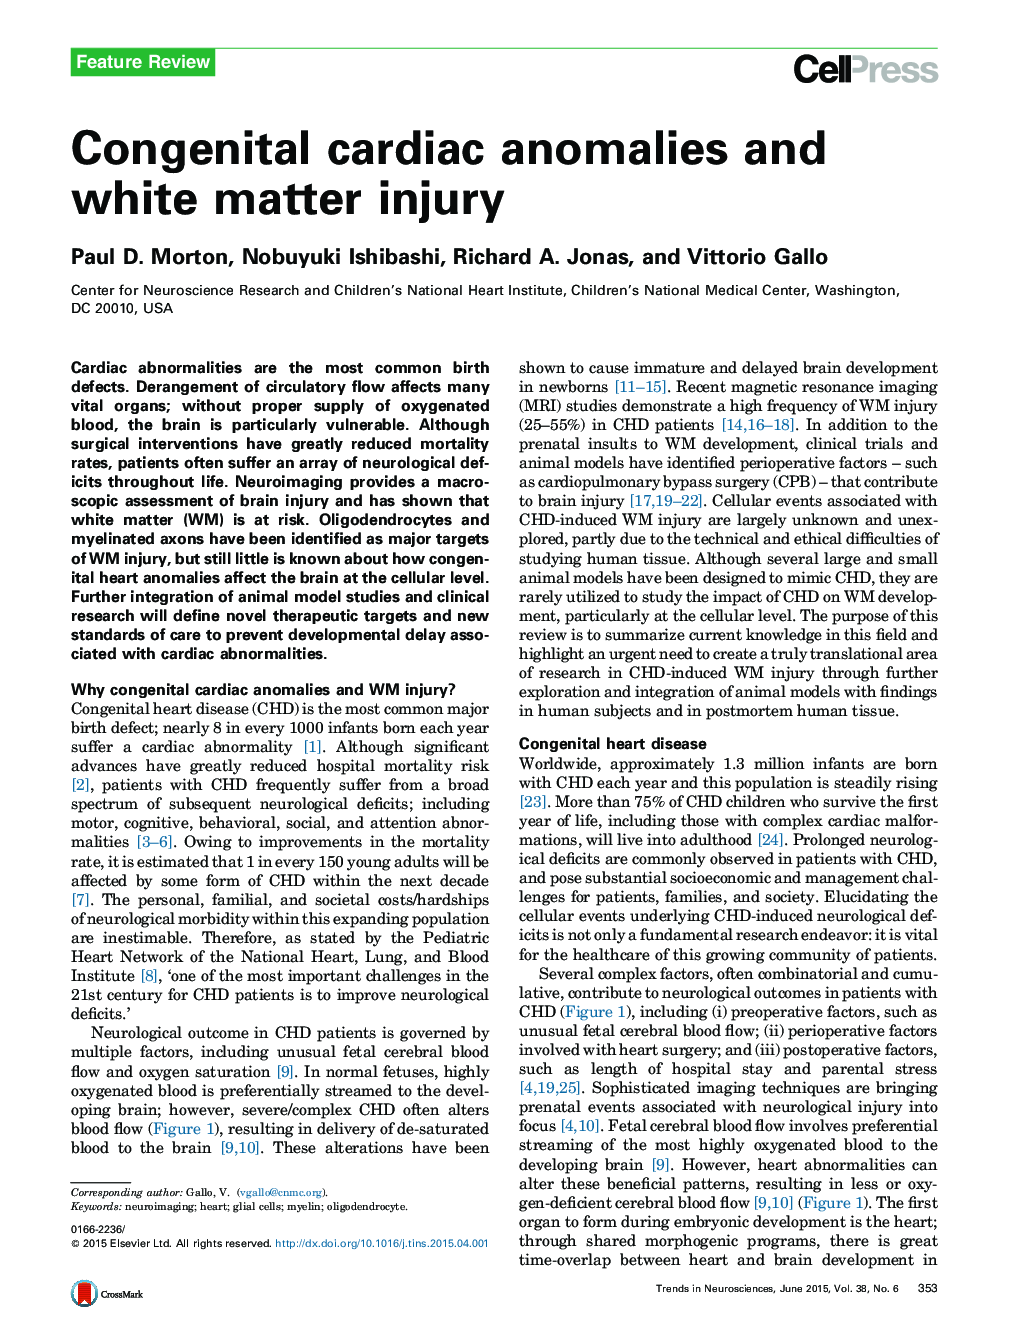 Congenital cardiac anomalies and white matter injury